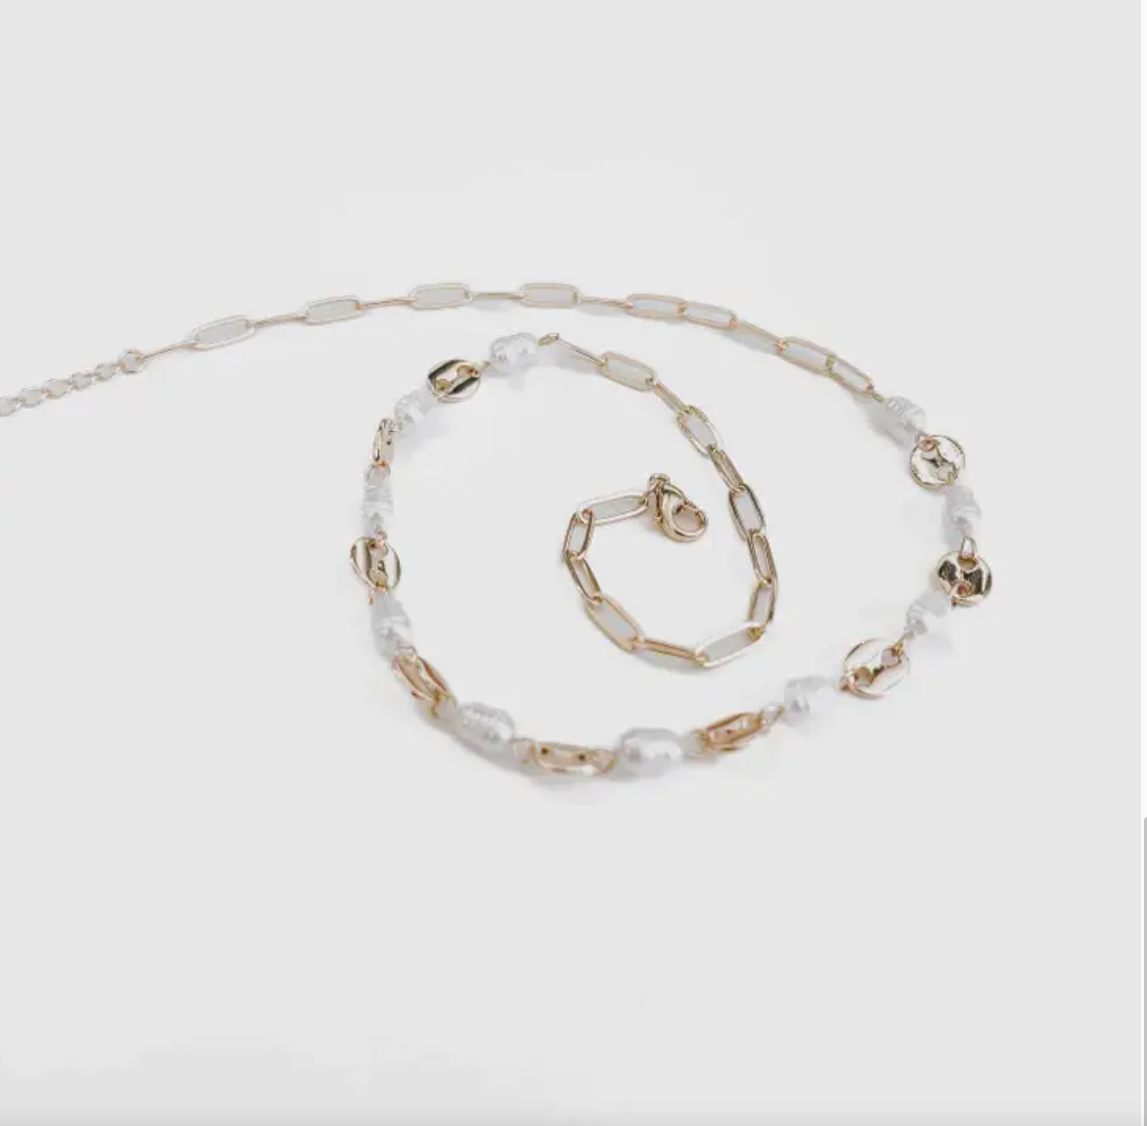 Perla Pearl Oval Chain Necklace